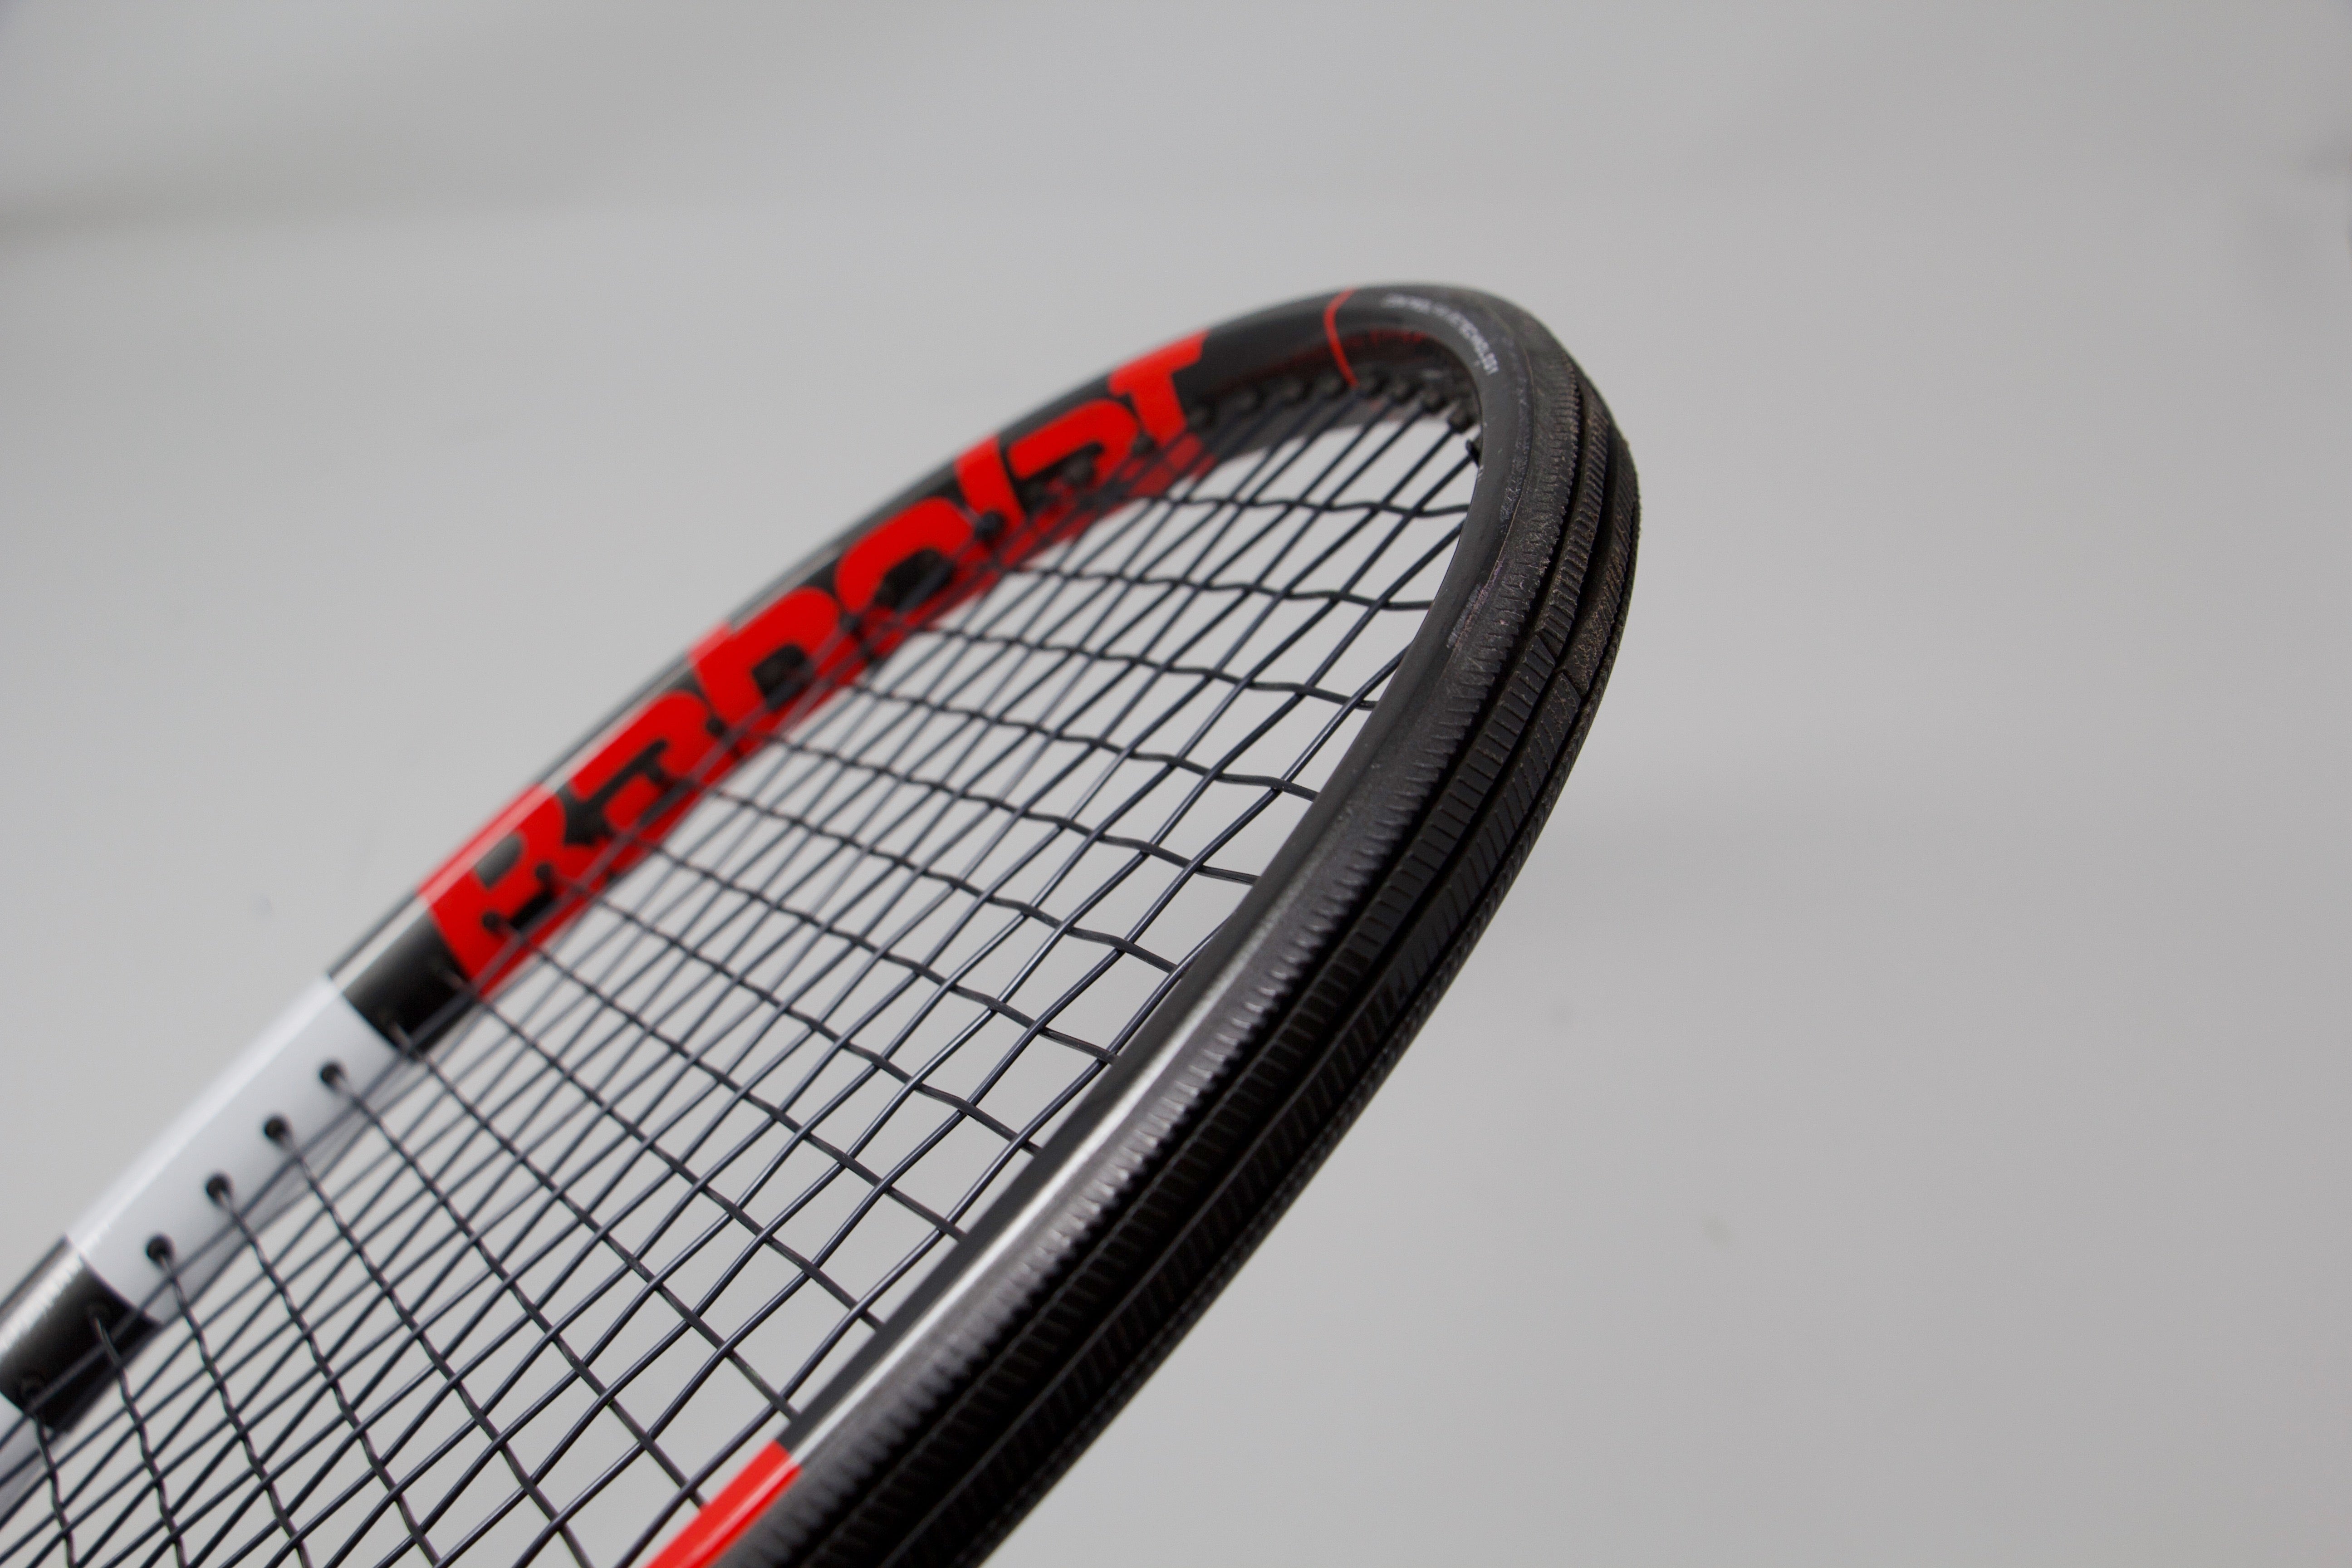 Babolat Pure Strike VS  2022 Refurbished Tennis Racket